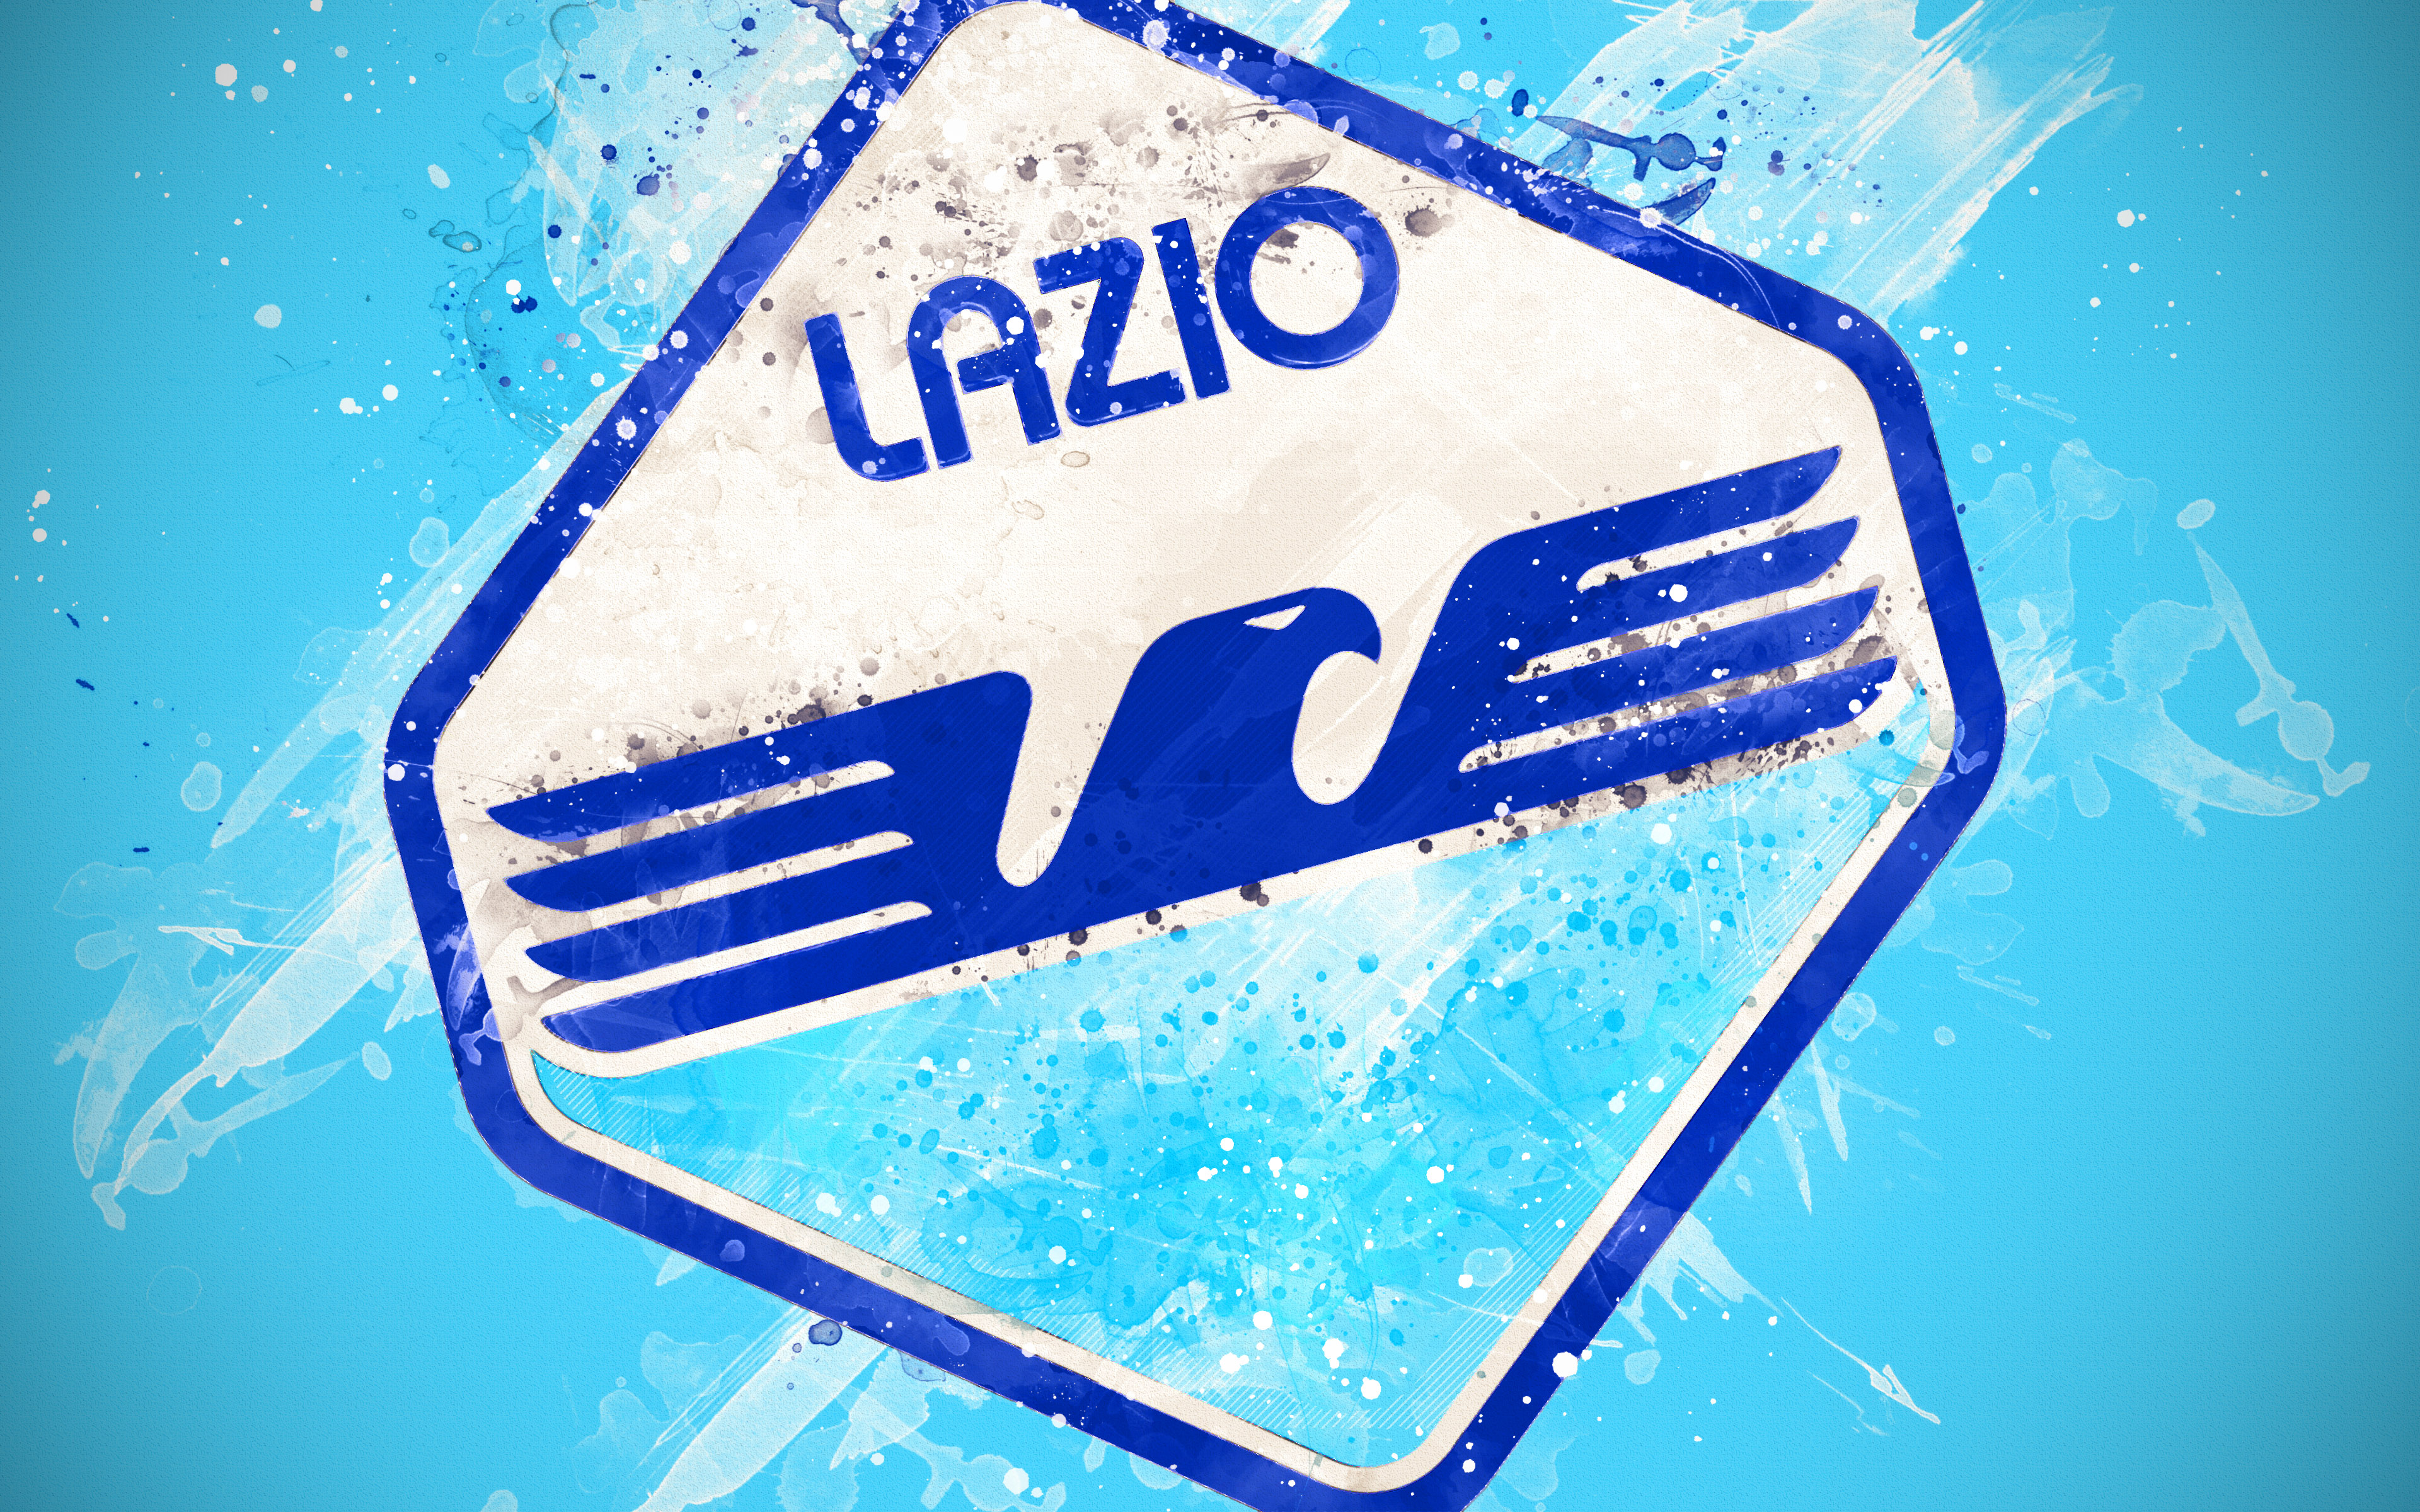 Descarga gratuita de fondo de pantalla para móvil de Fútbol, Logo, Deporte, Ss Lazio.